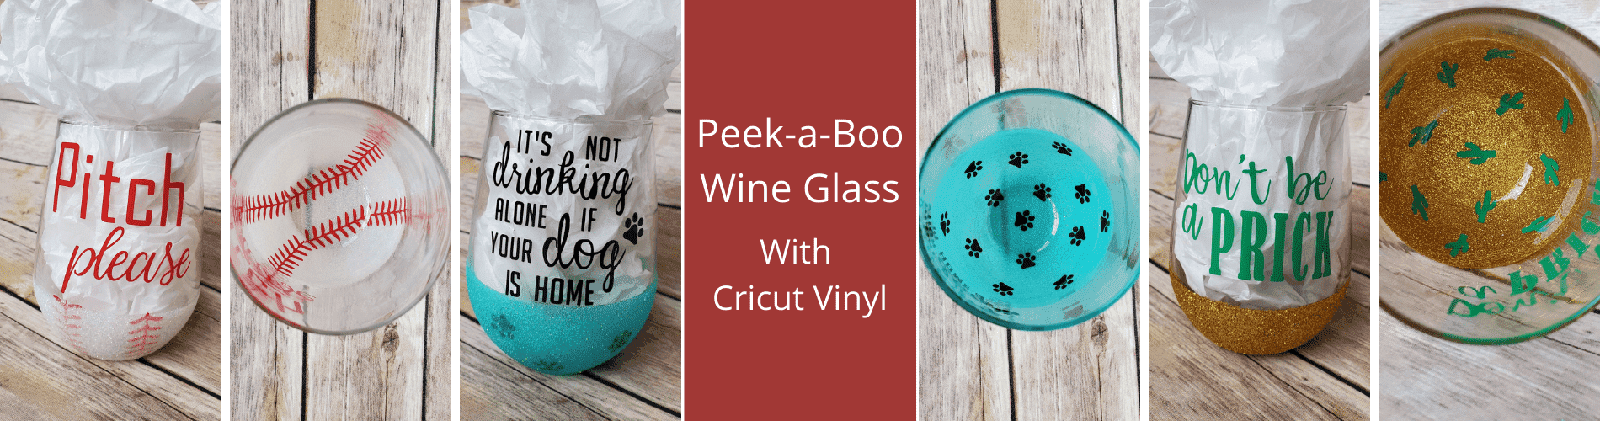 Peek-a boo Wine Glass with Cricut Vinyl